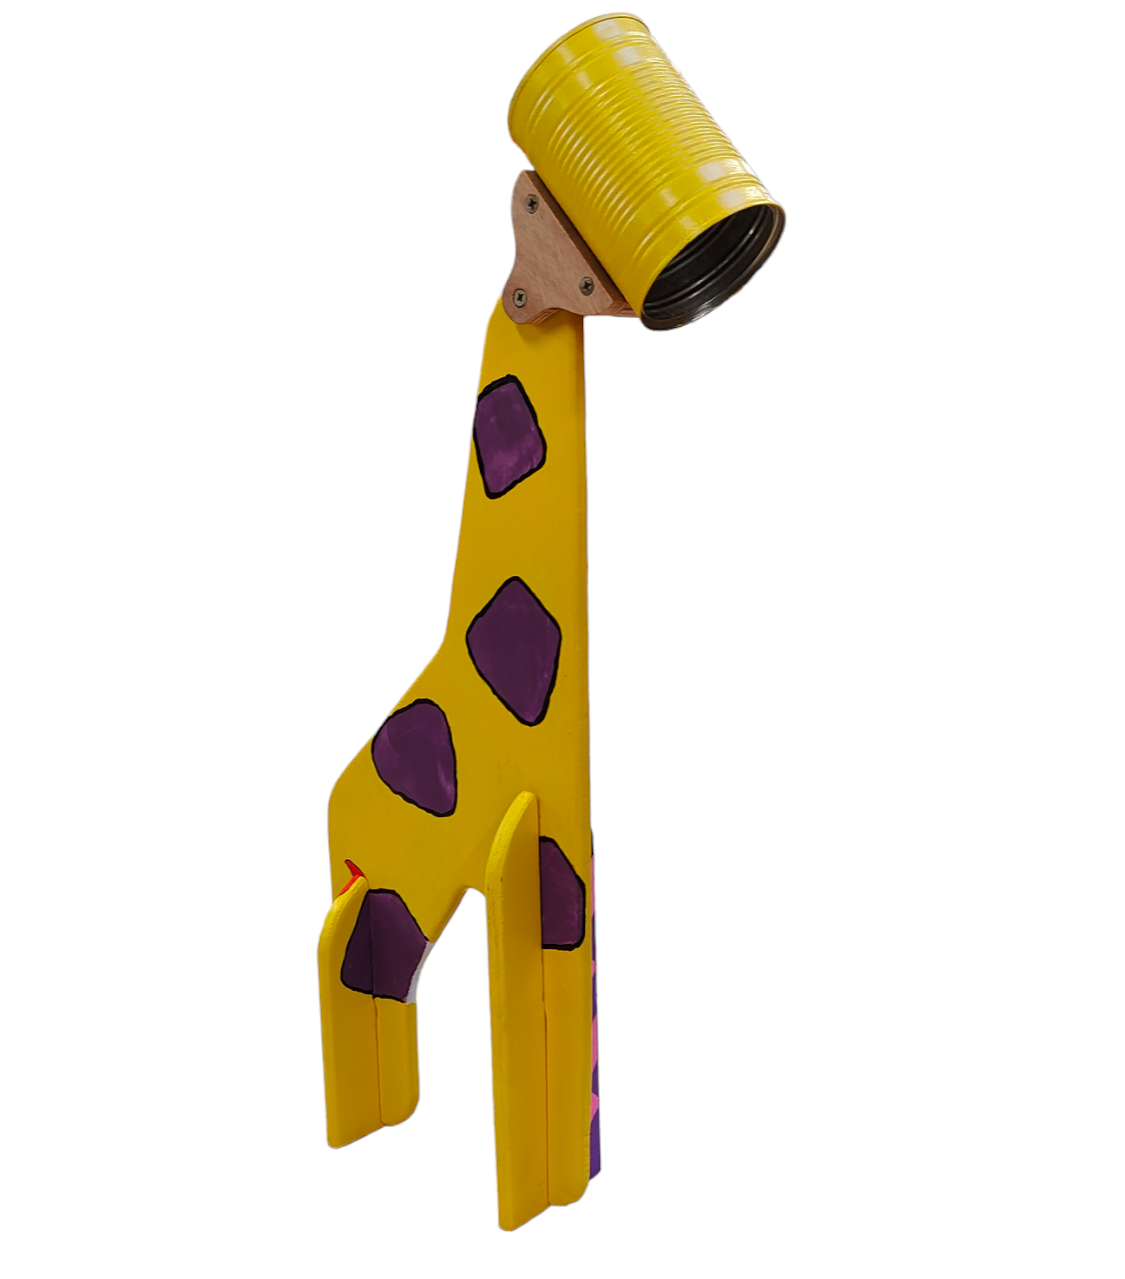 RE: Small Giraffe Lamp (Painted)